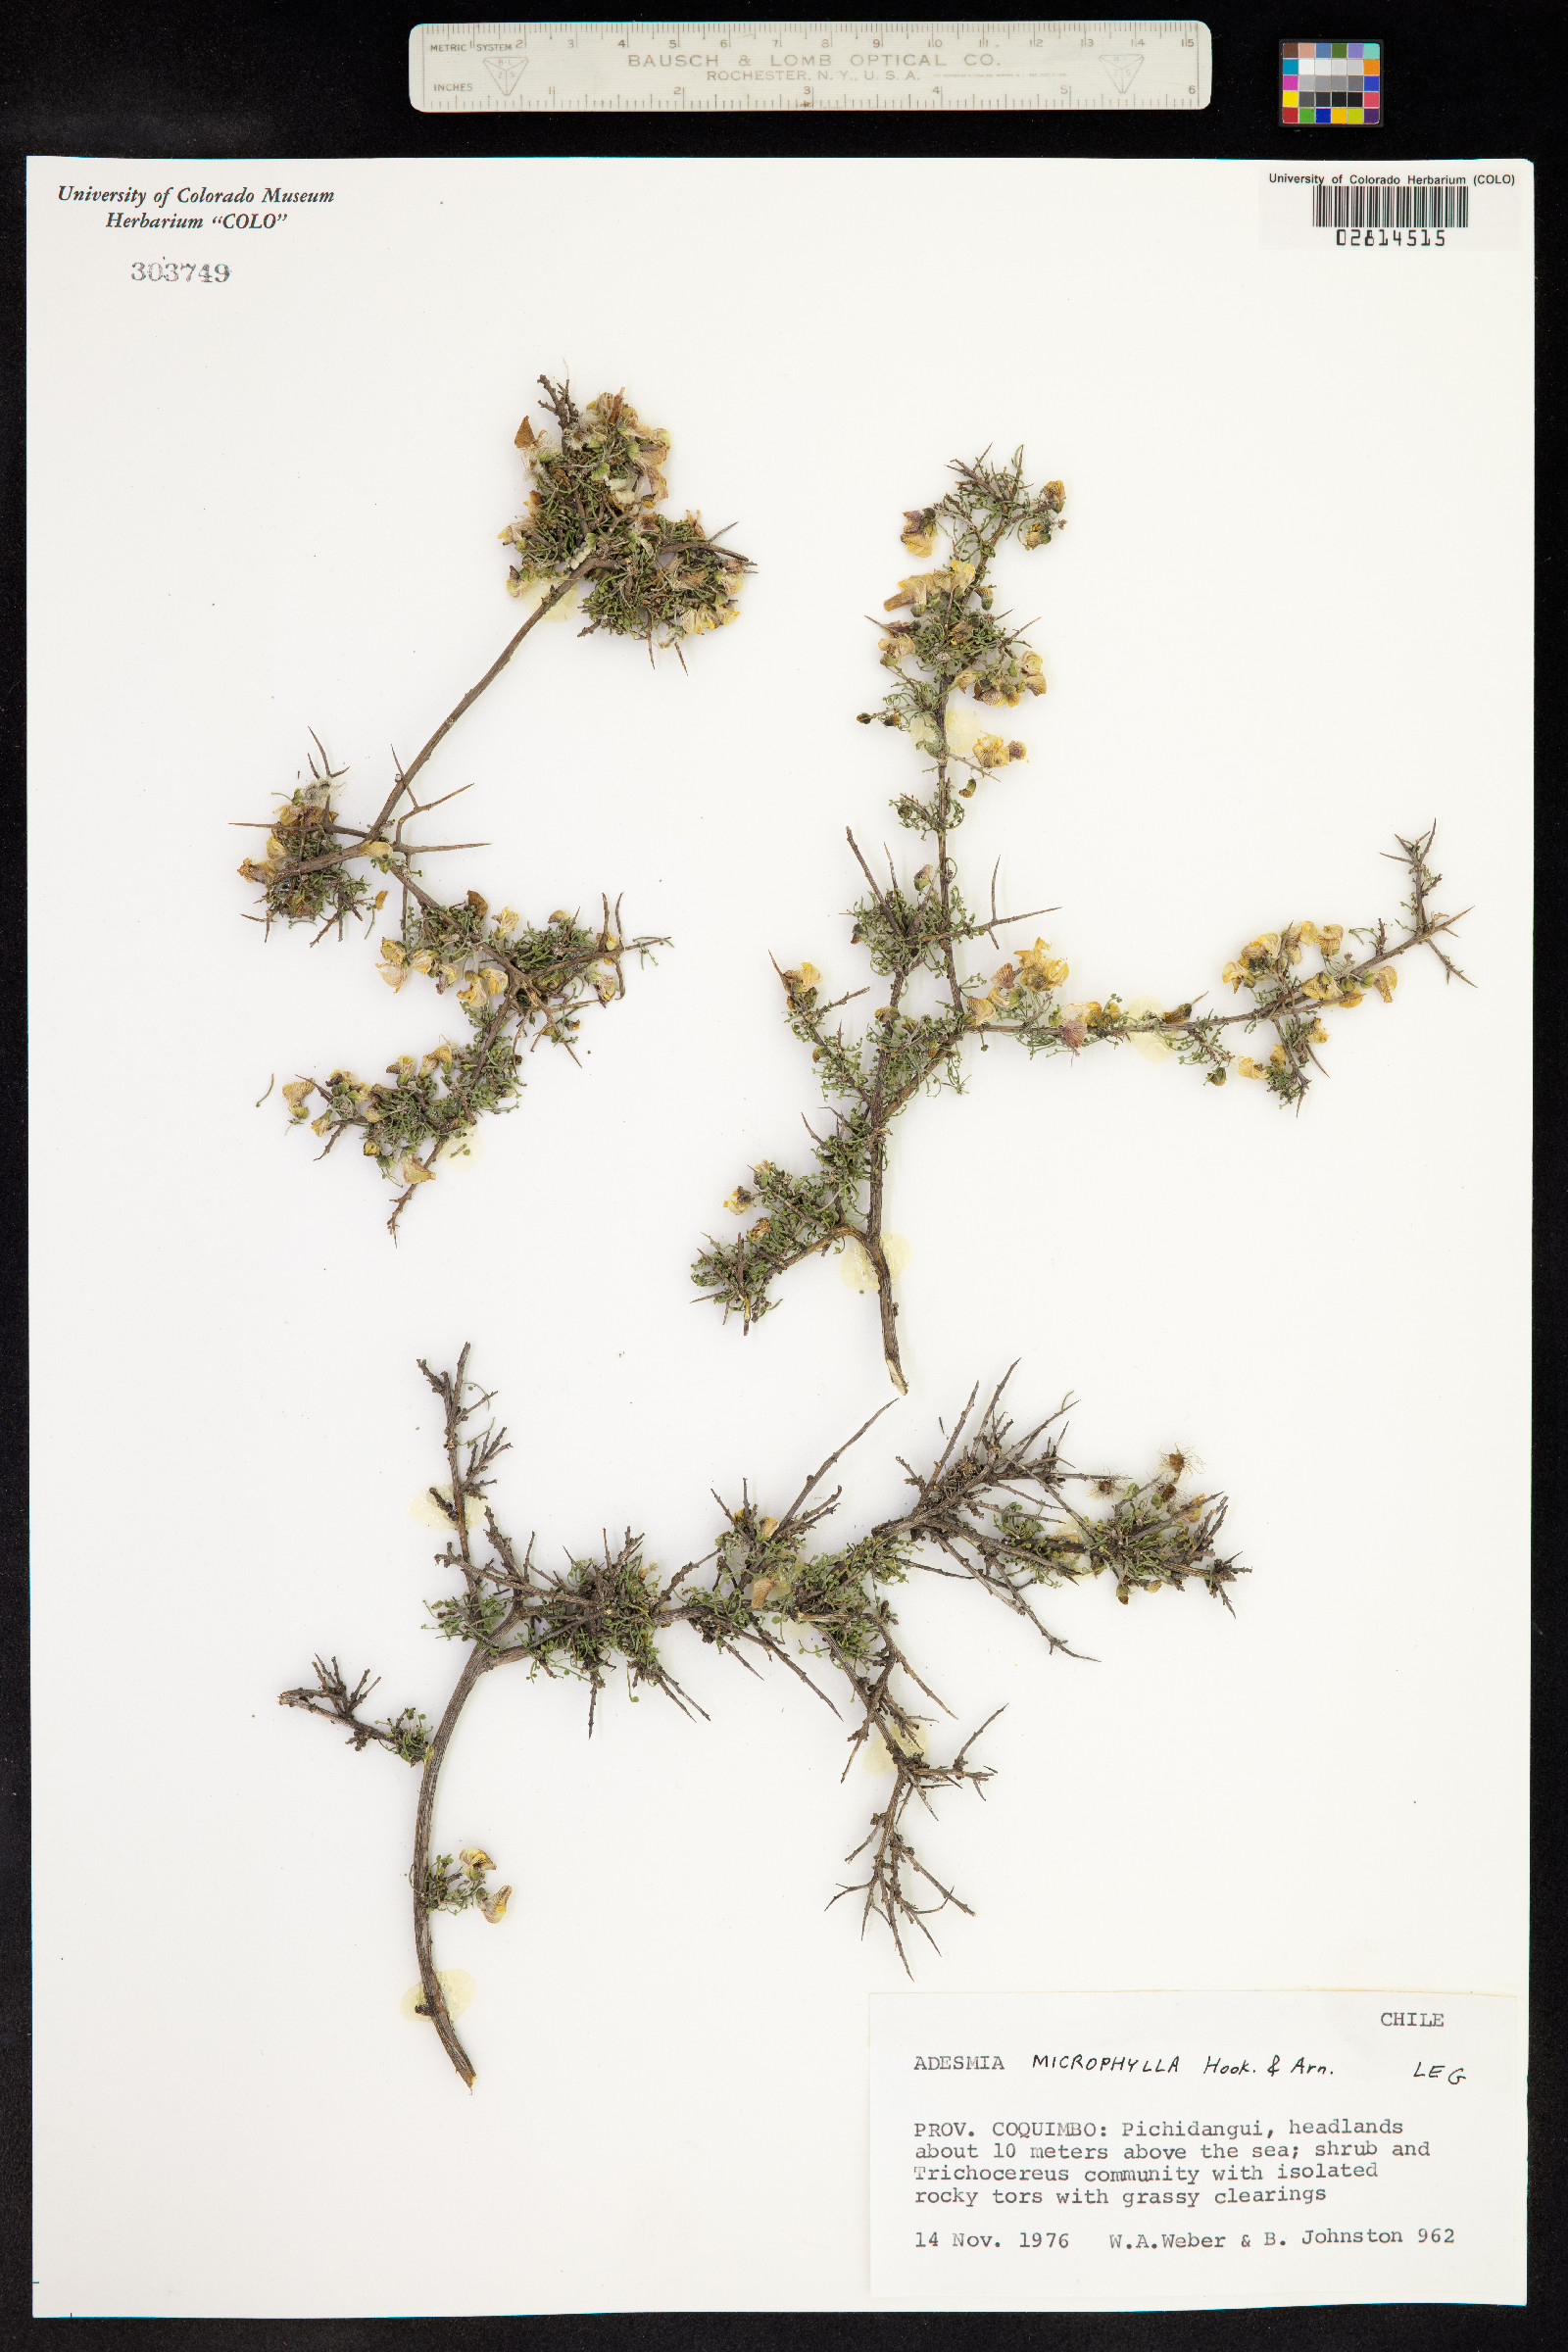 Adesmia microphylla image